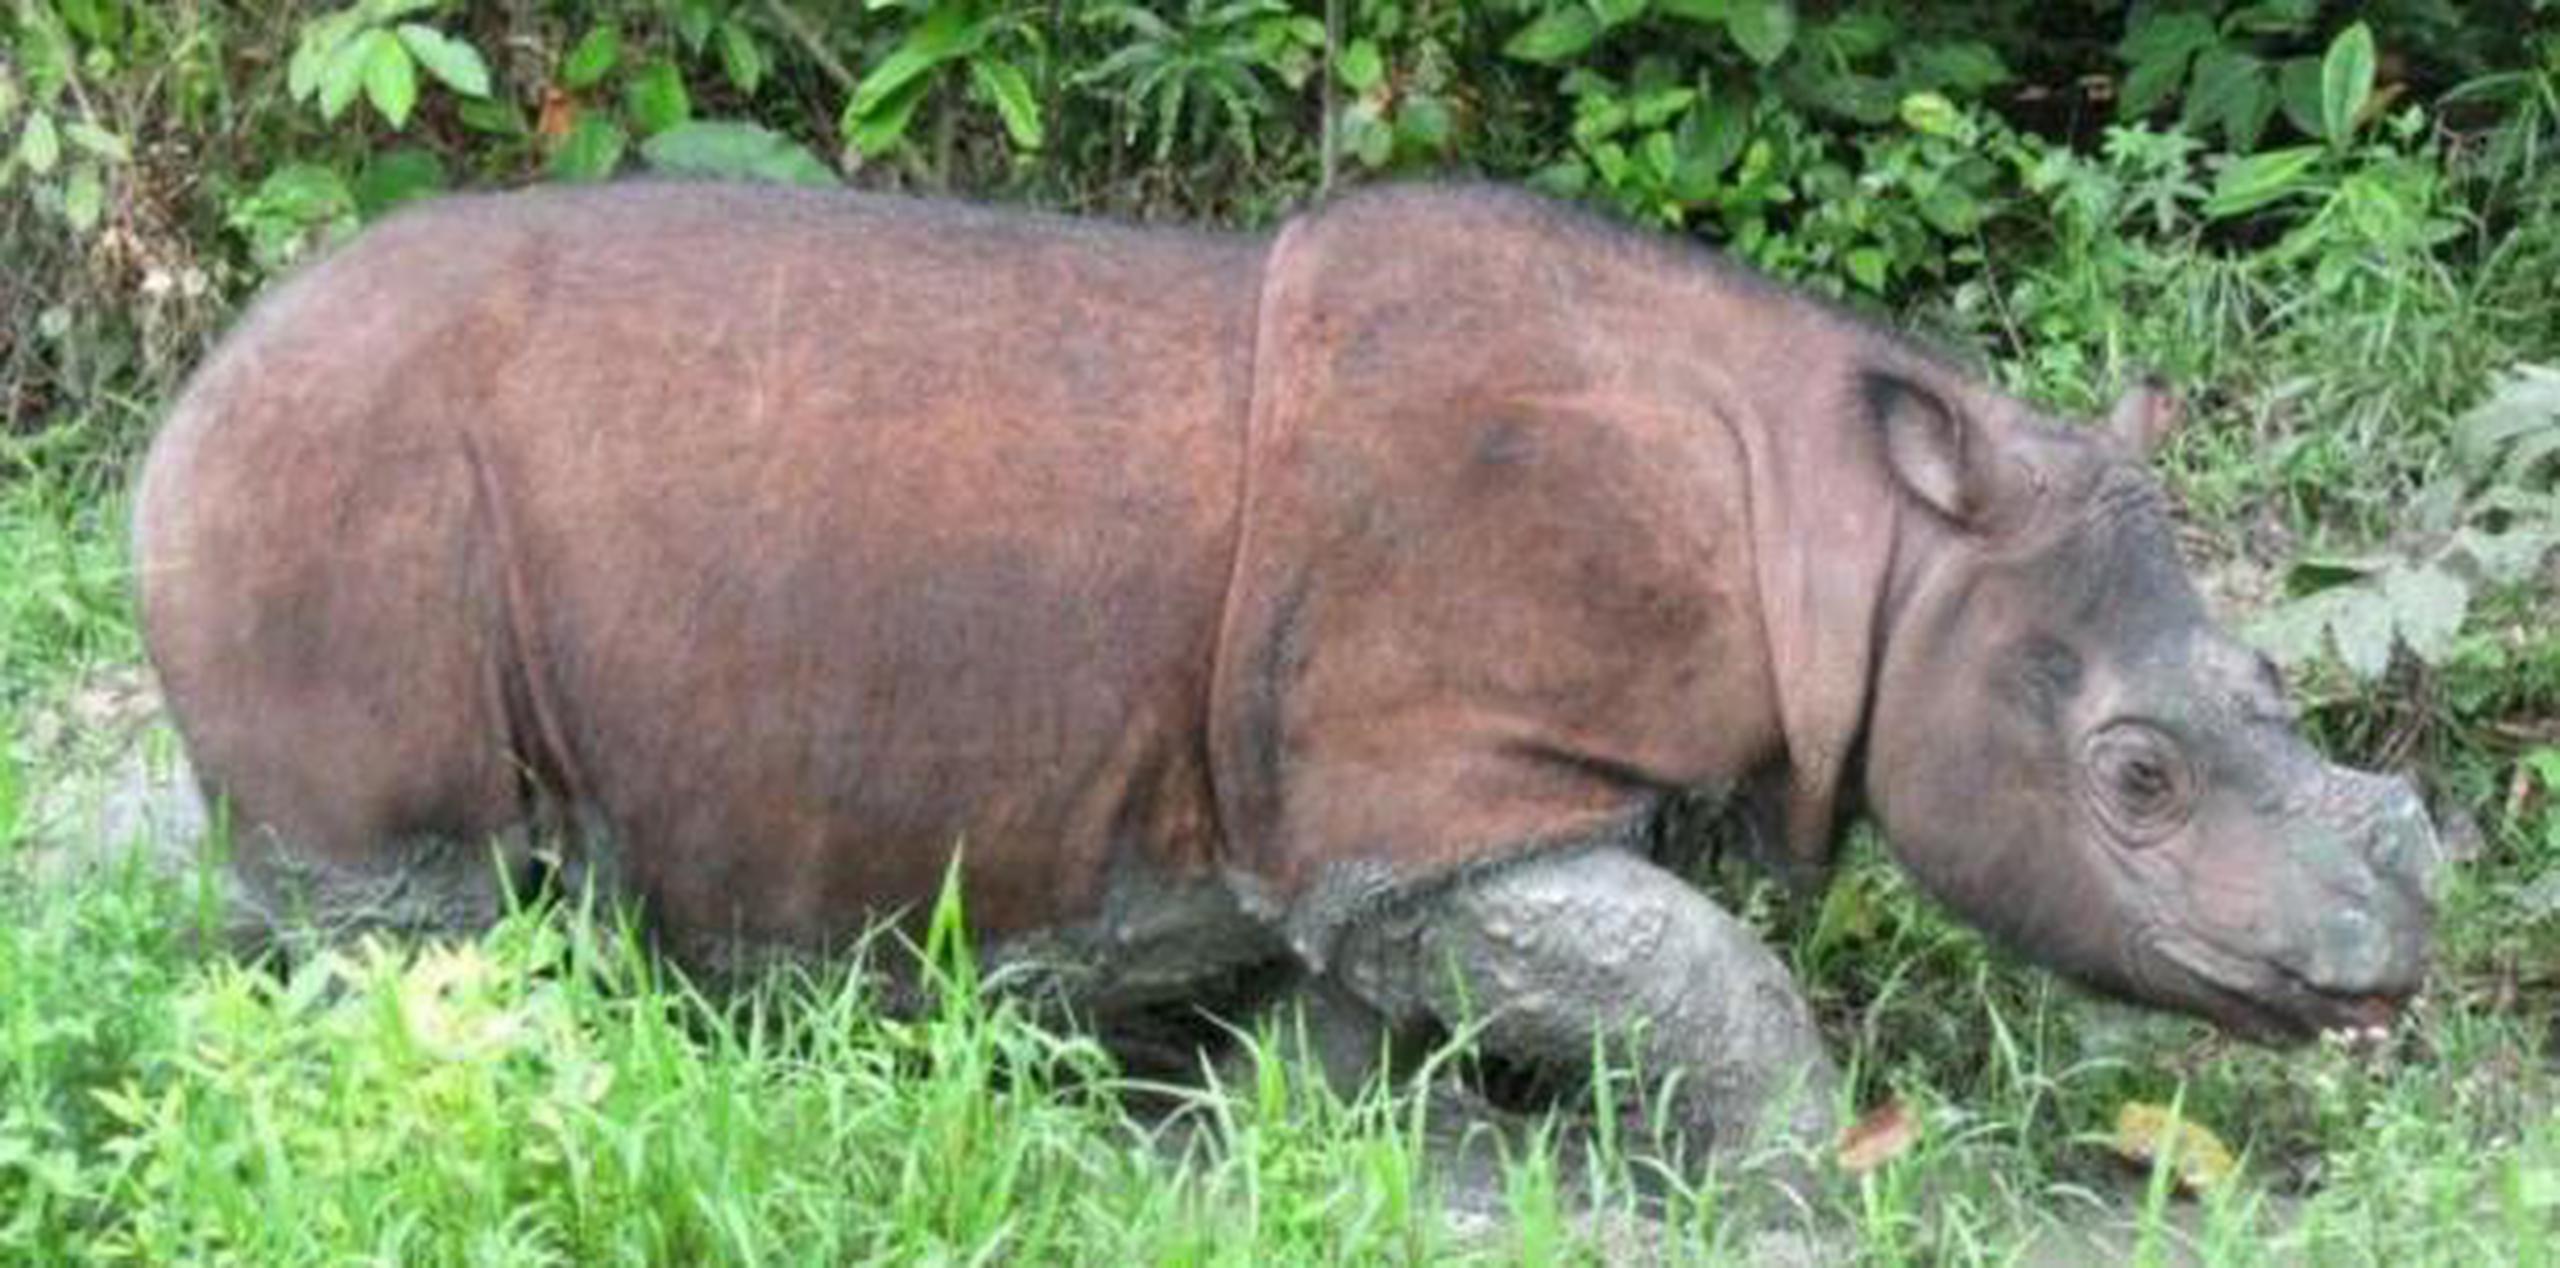 Tam falleció este 27 de mayo. (International Rhino Fundation)